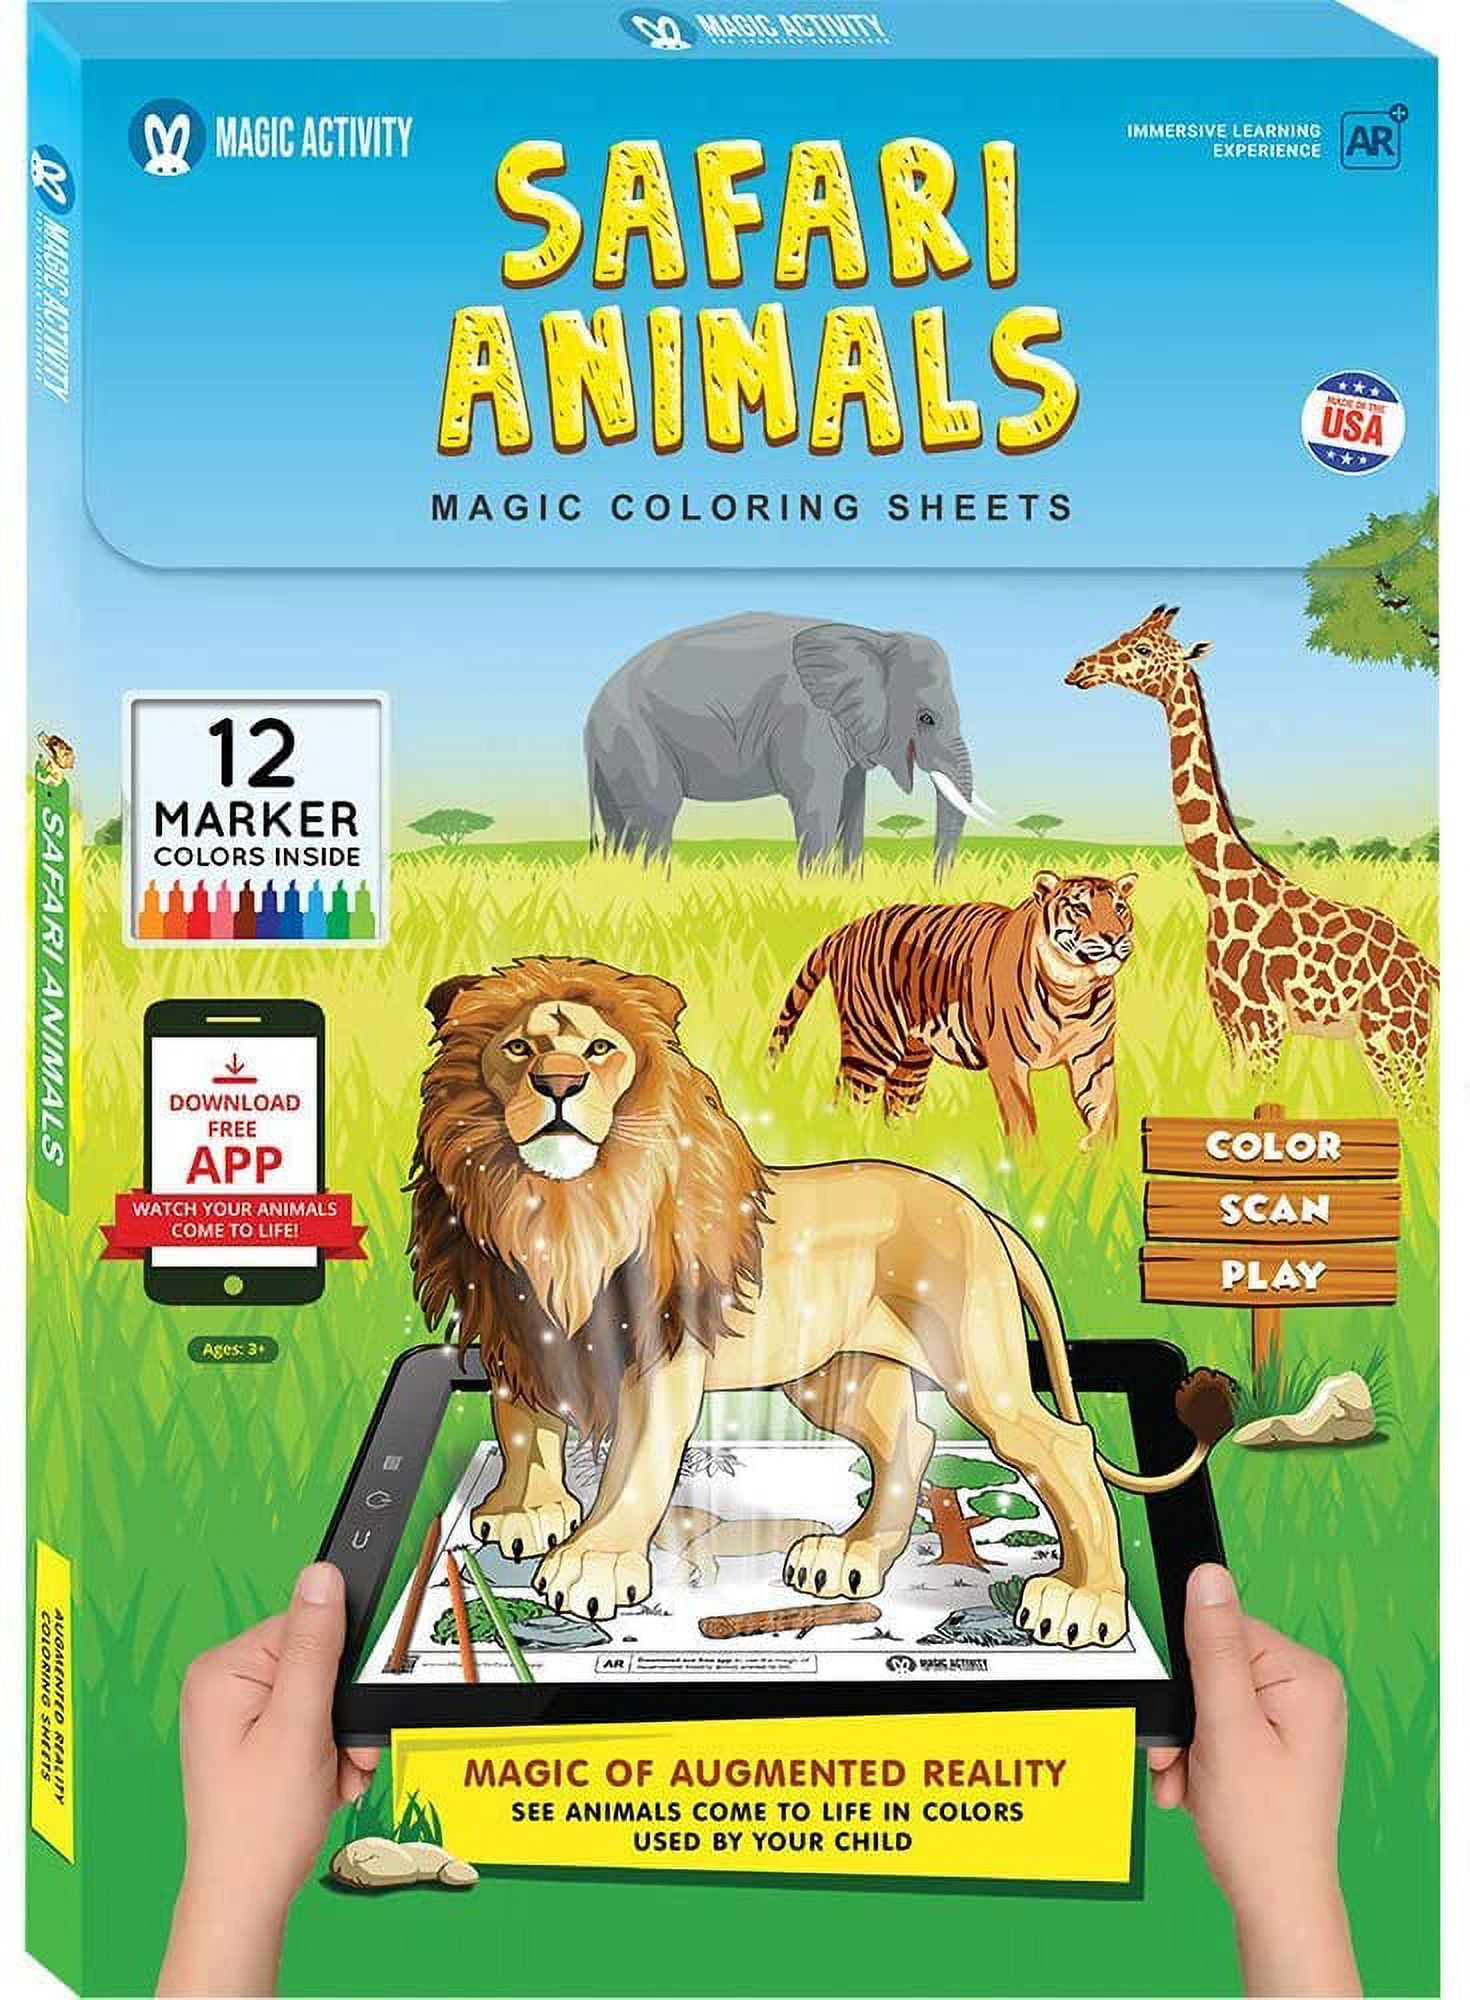 Kids Coloring and Painting Set, Safari, 4 x 4 –